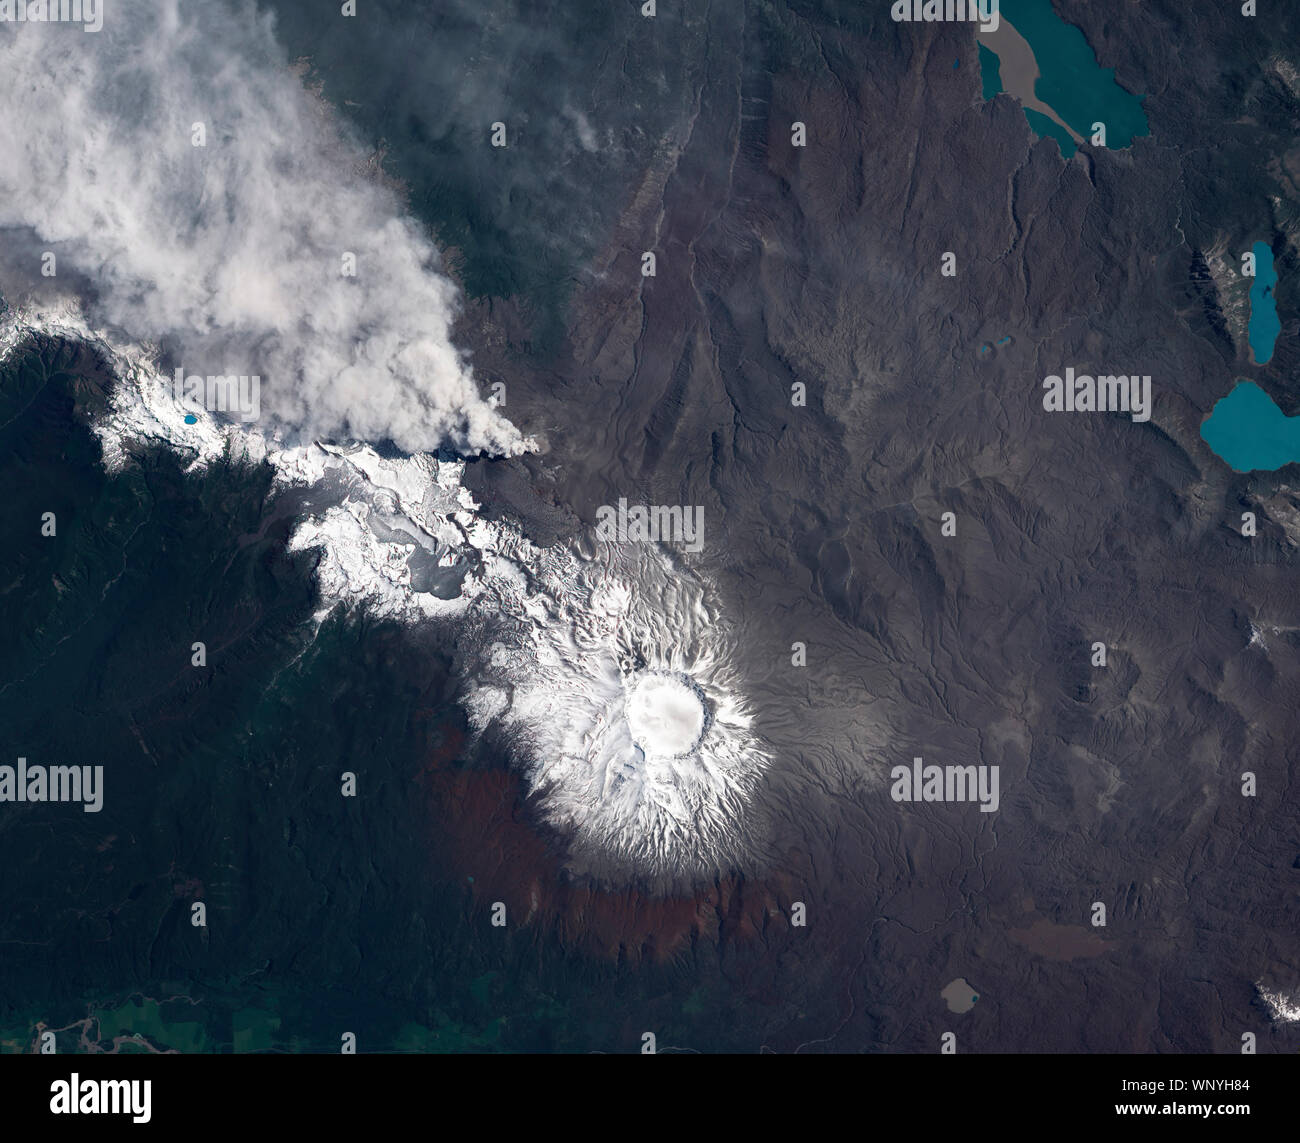 Puyehue-Cordón Caulle Volcano erupting, Chile, S America,  December 23, 2011, by NASA/Jesse Allen/DPA Stock Photo